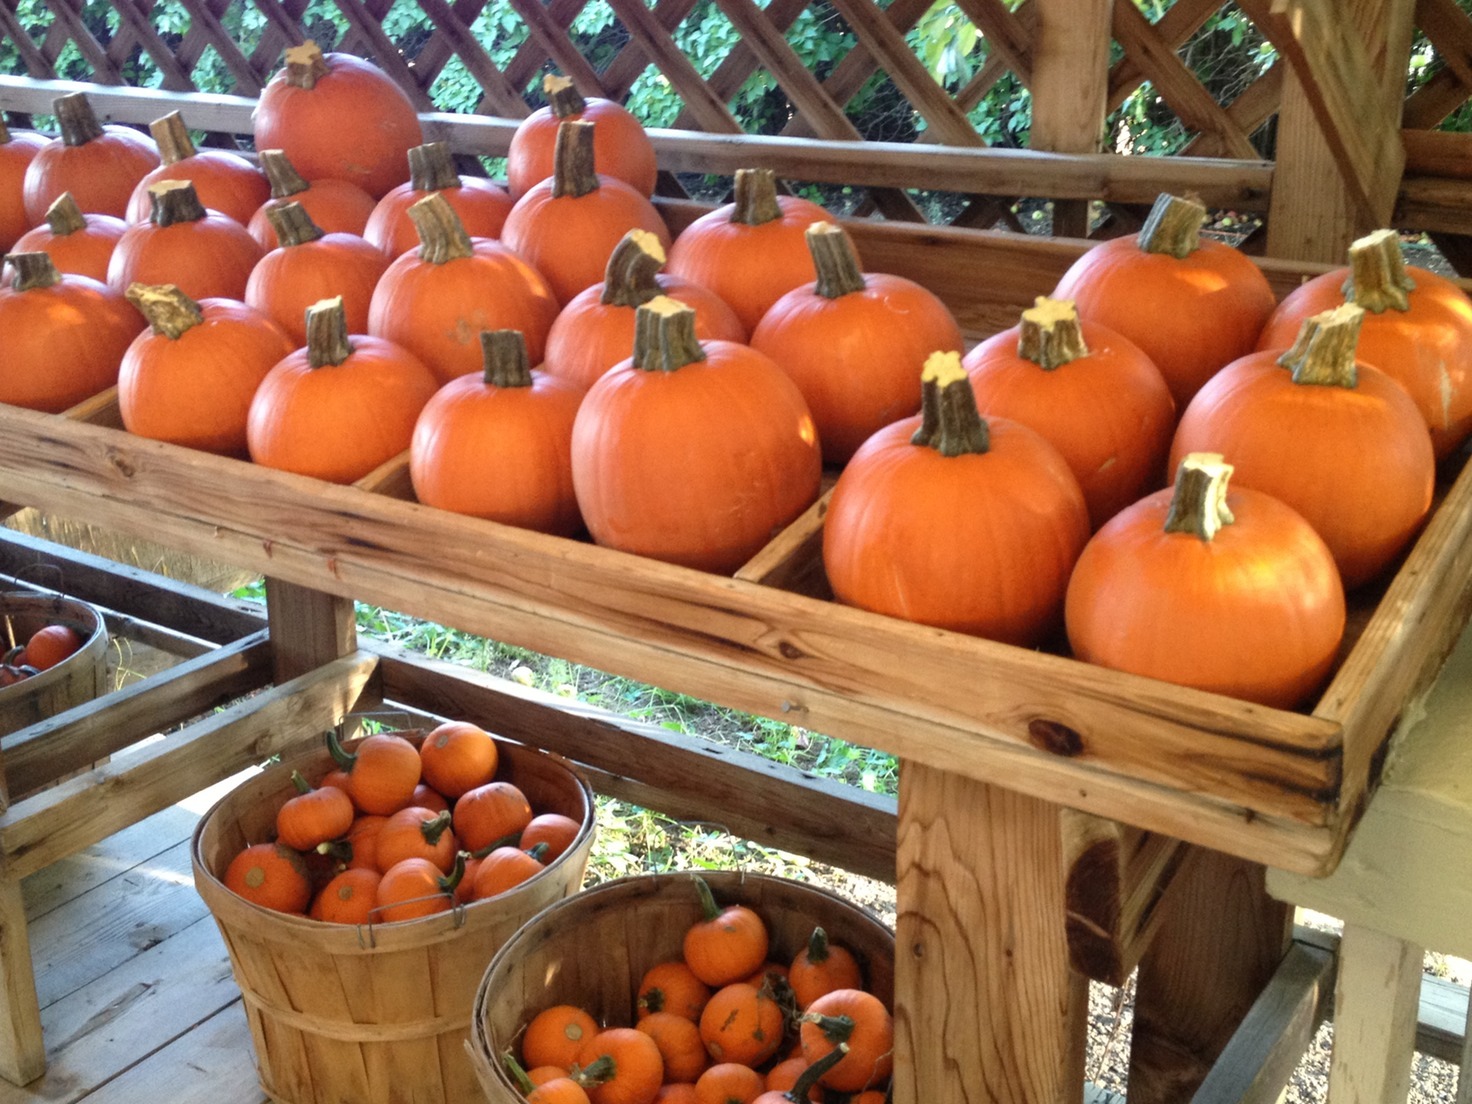 Display of pumpkins